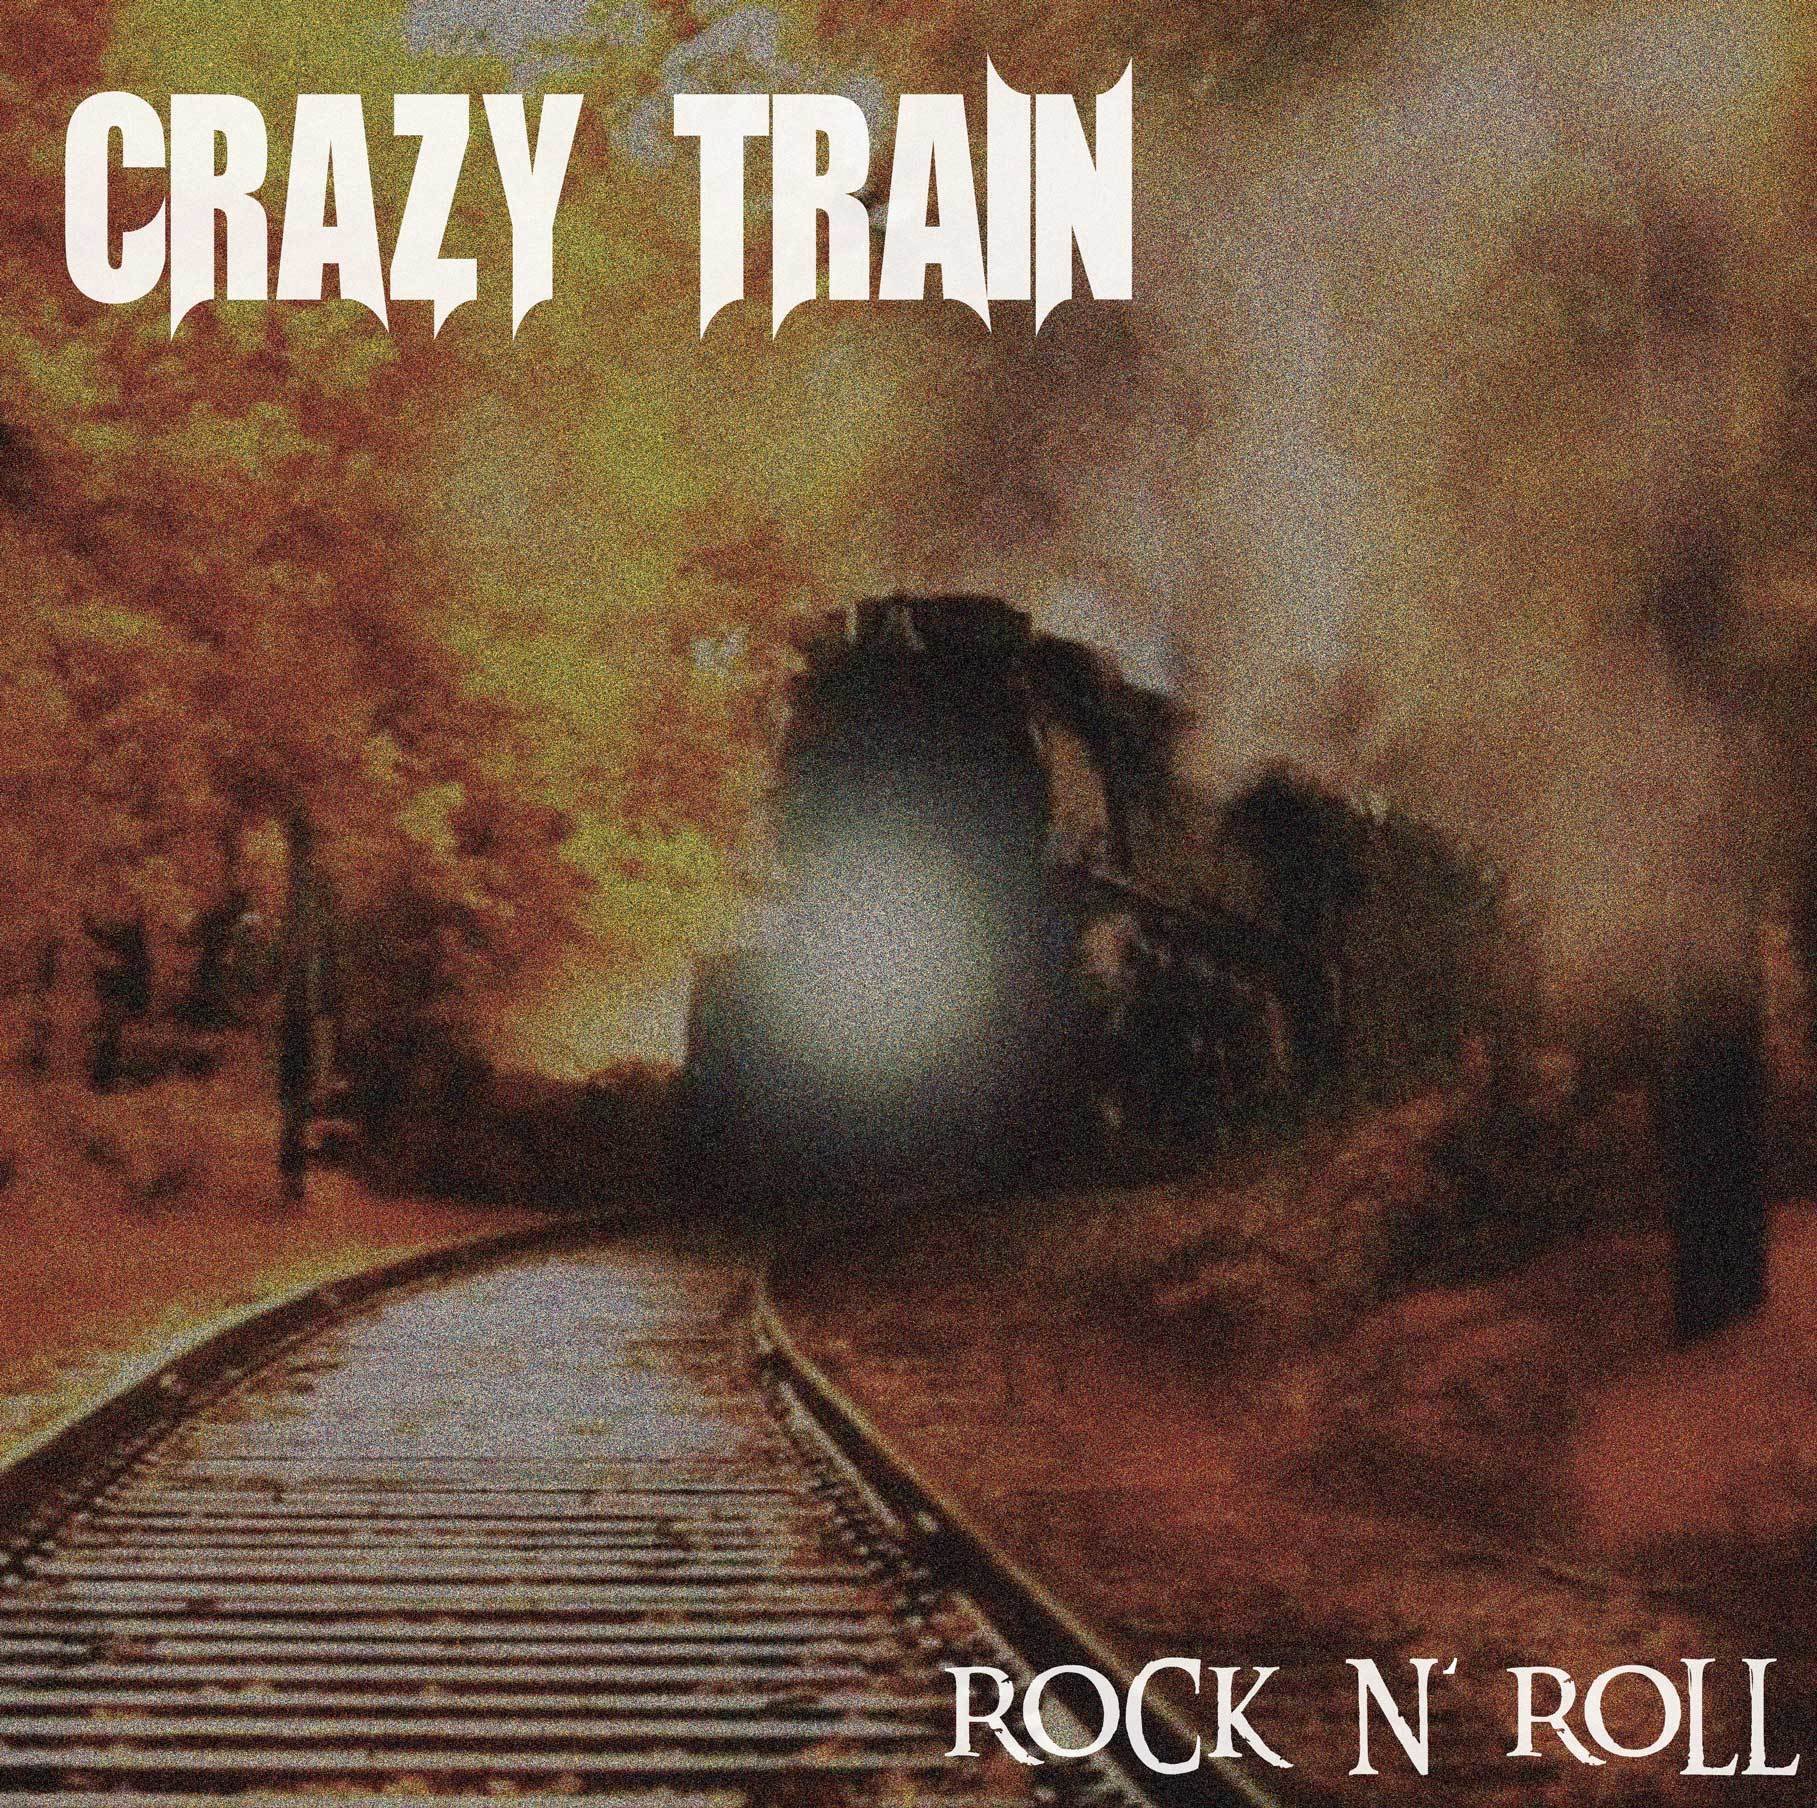 crazy train mp3 free download